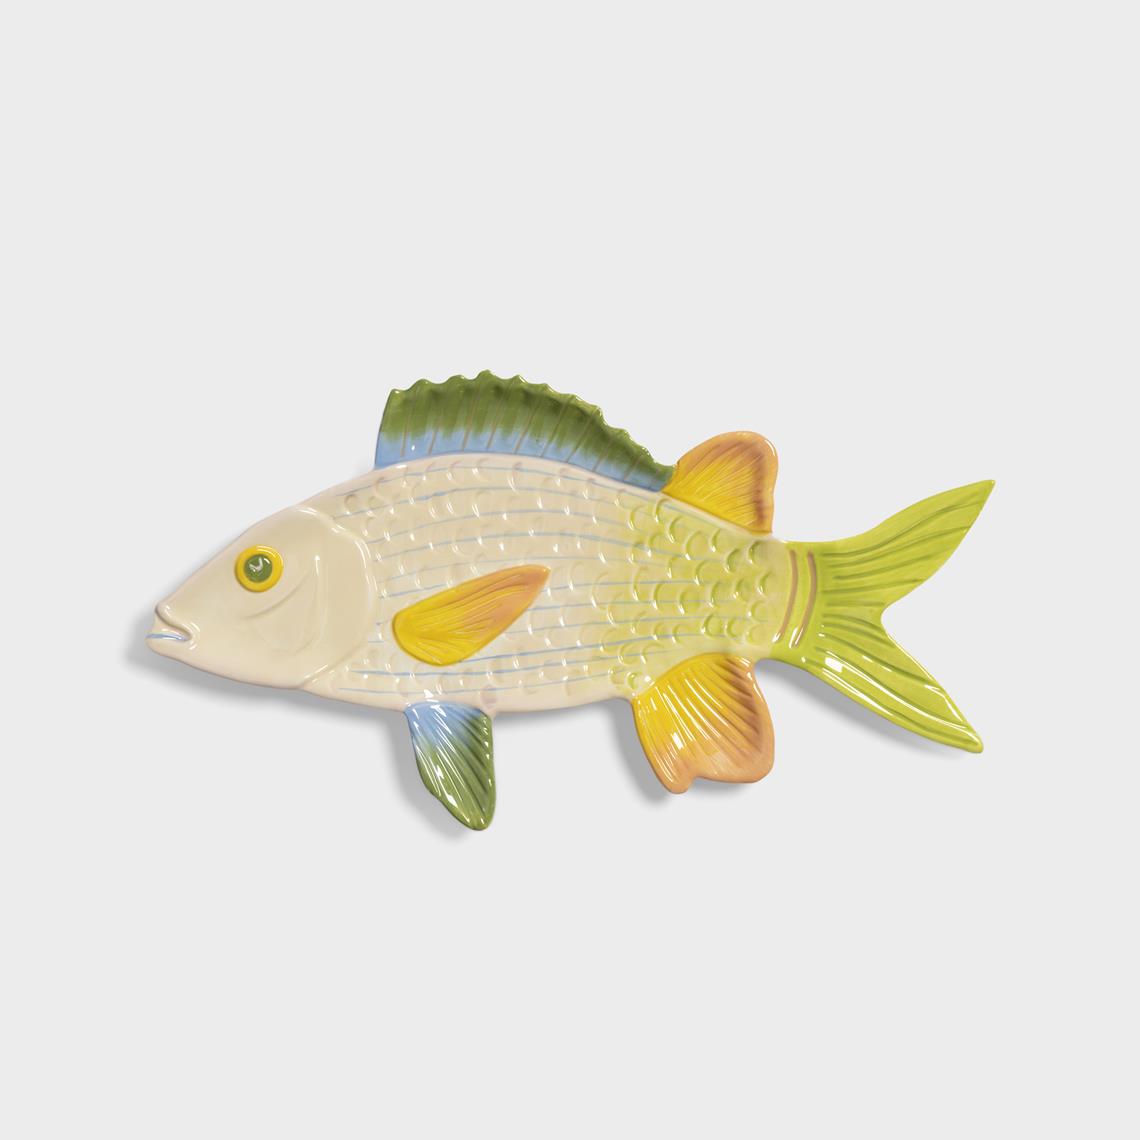 Plate fish trigger